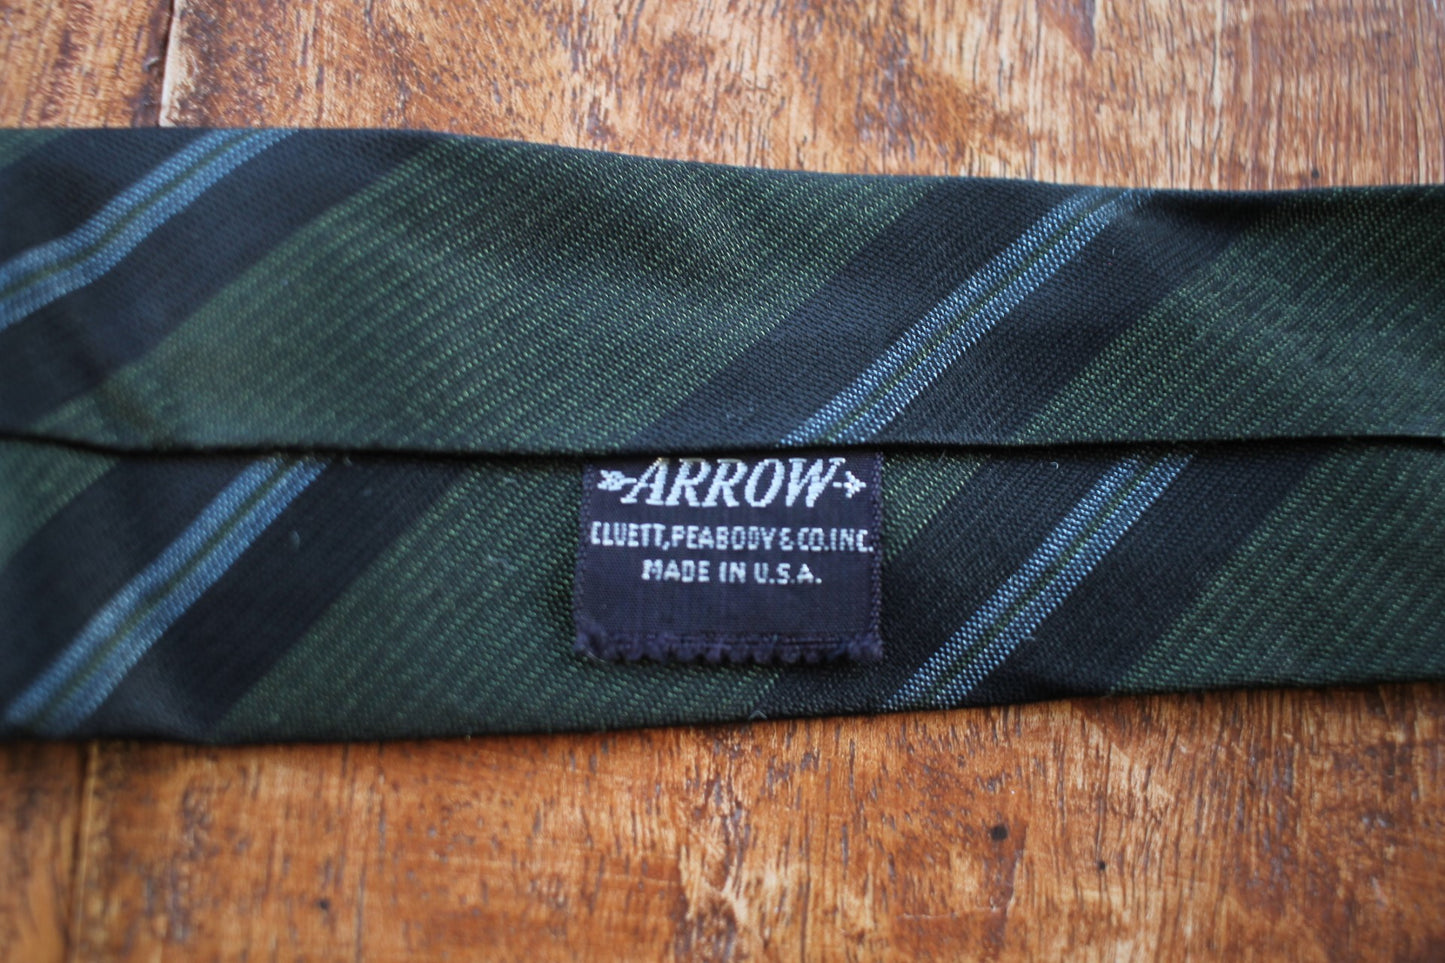 Vintage Arrow dark green black striped pattern skinny tie